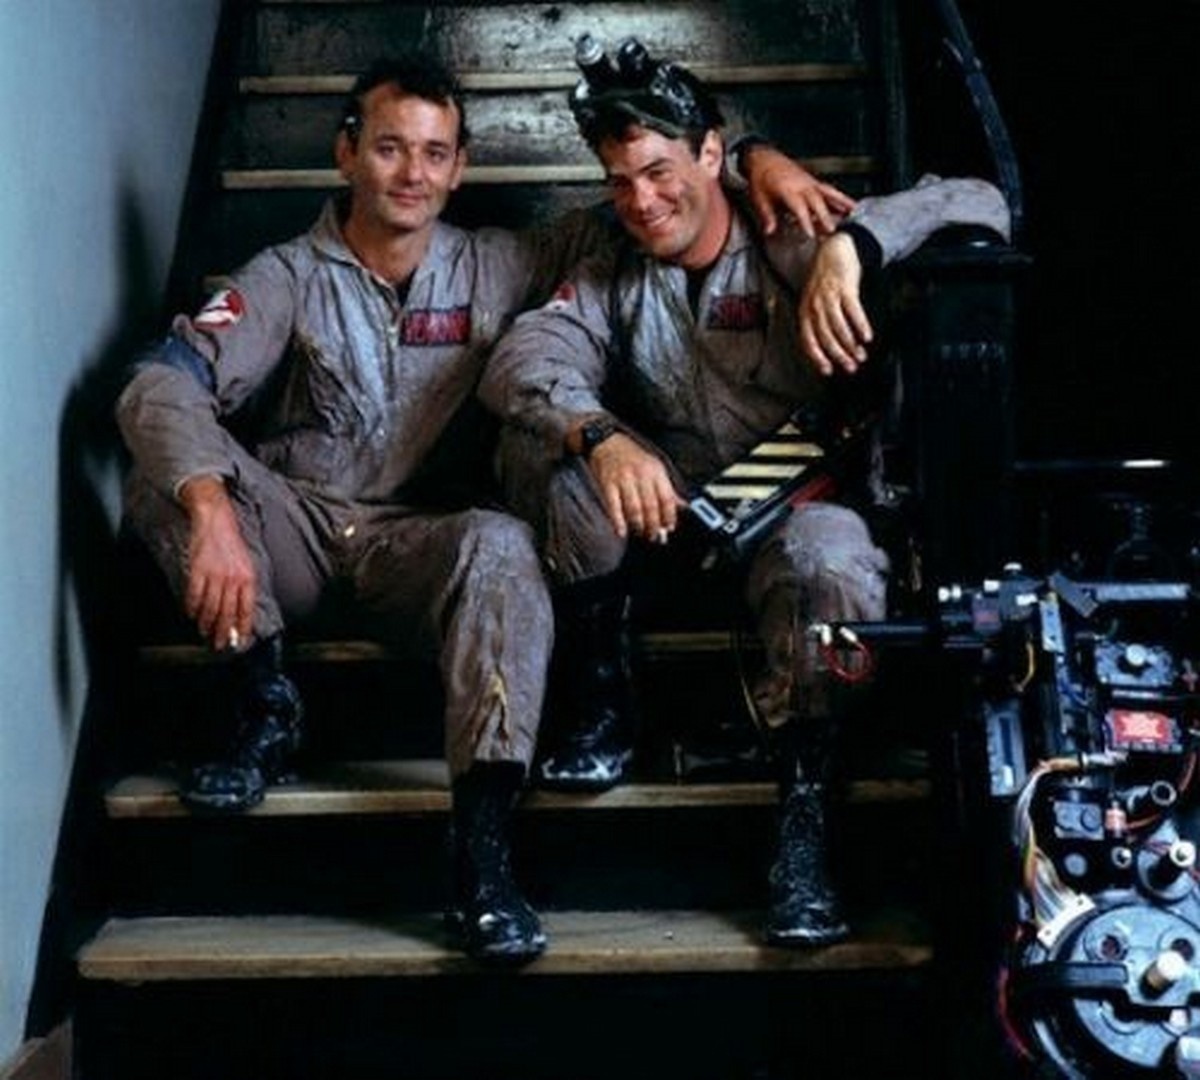 Bill Murray and Dan Aykroyd taking a break on the set of Ghostbusters in 1984.